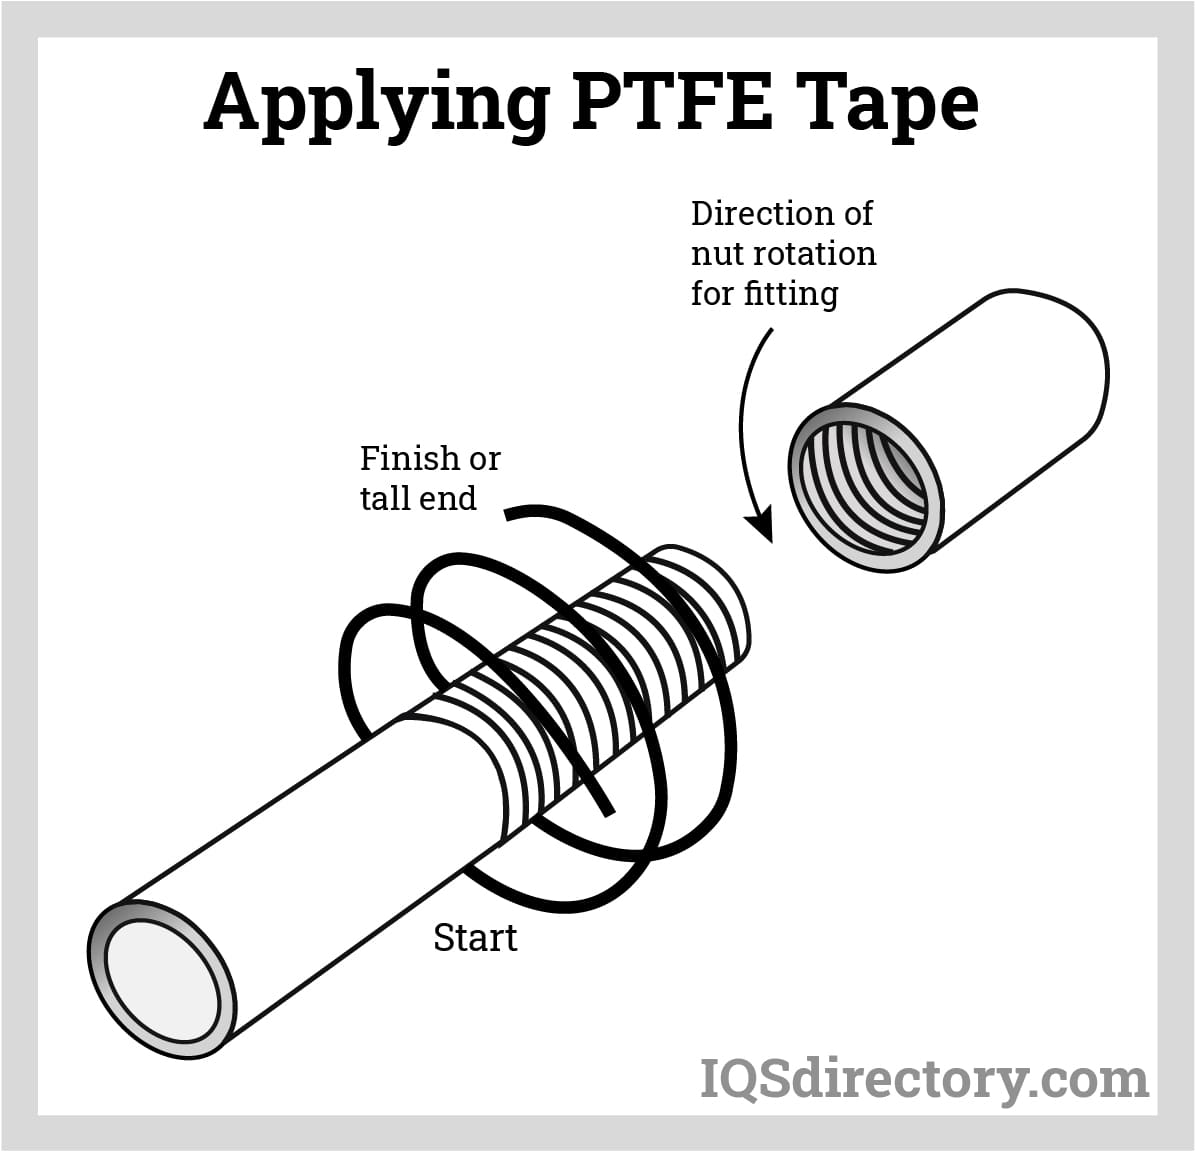 Applying PTFE Tape